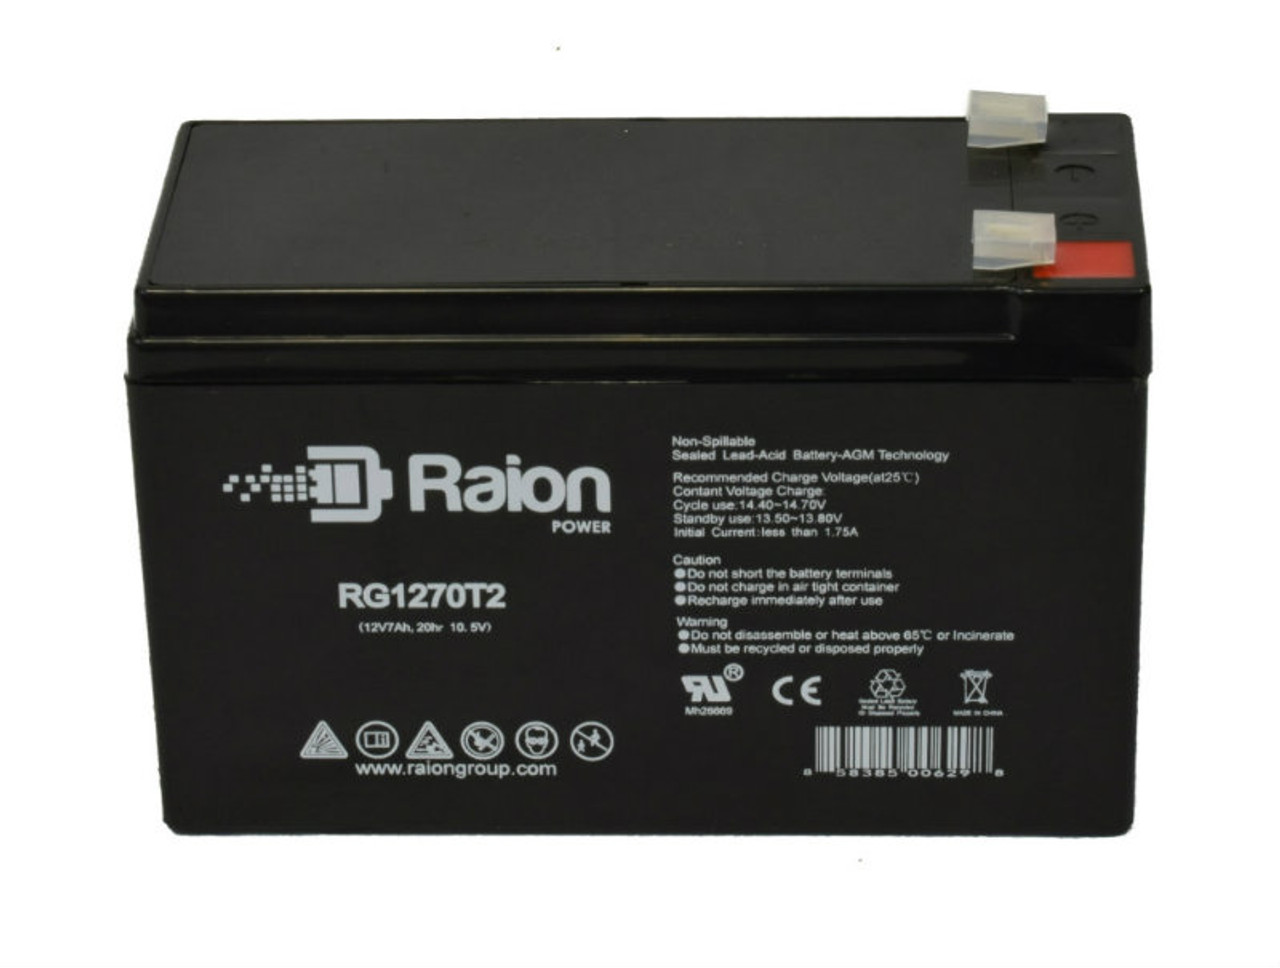 Raion Power RG1270T2 12V 7Ah Lead Acid Battery for Ultra Products 1000 VA AVR Lawn Mower